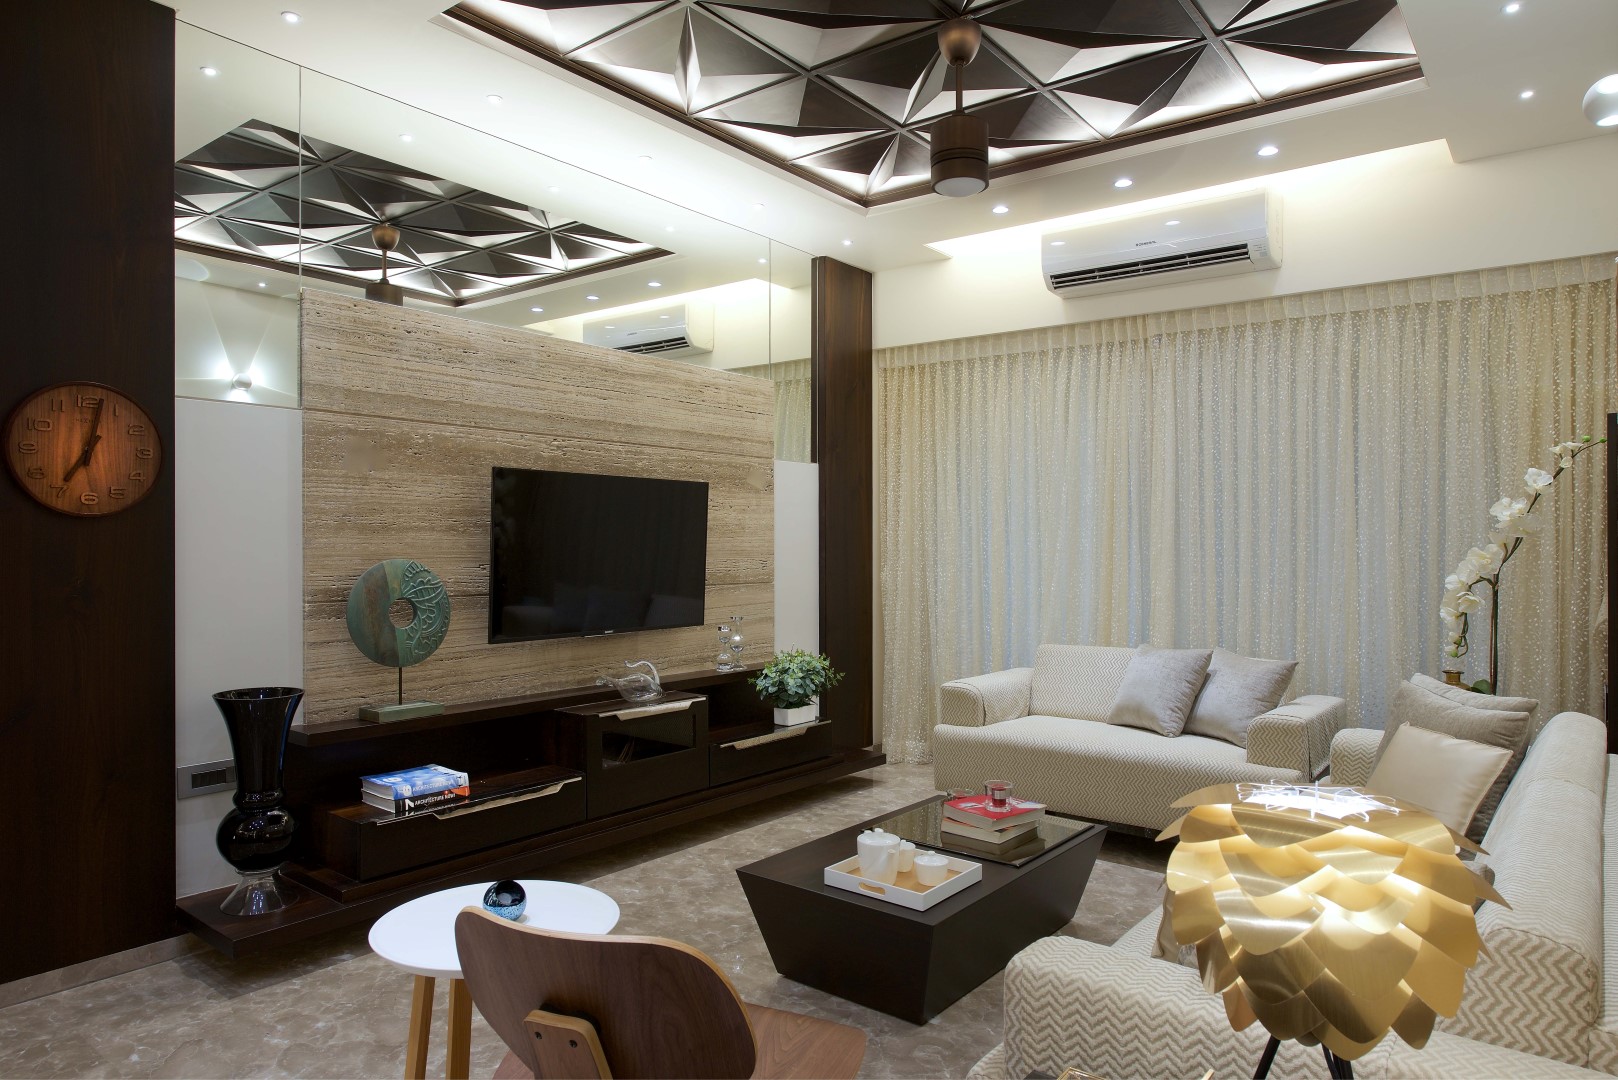 3 BHK Apartment Interiors at Yari Road Amit Shastri Architects The